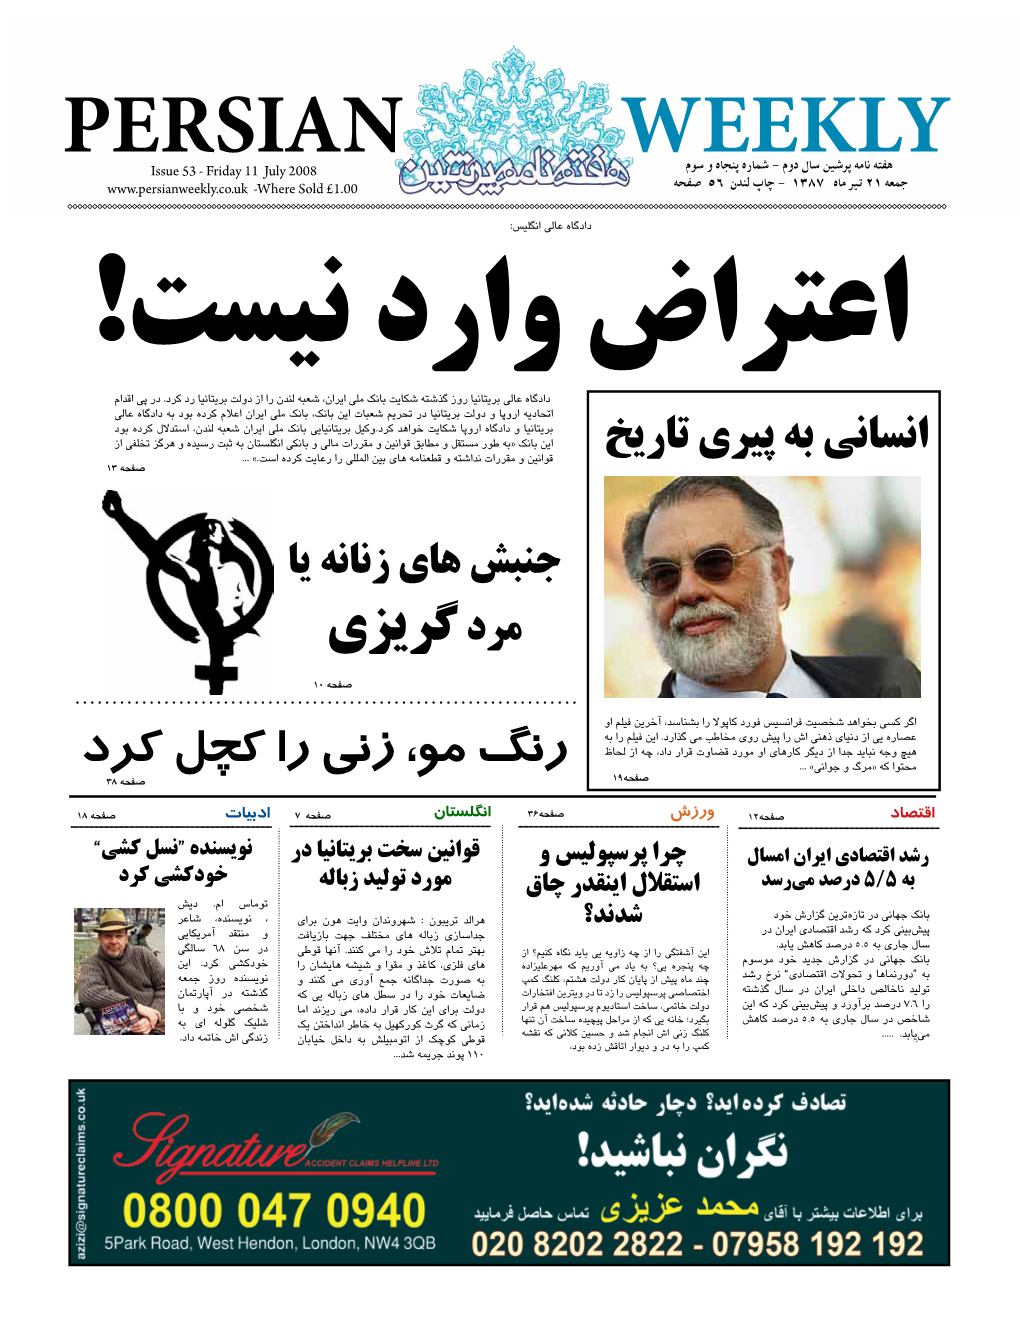 Persian Weekly Newspaper Design